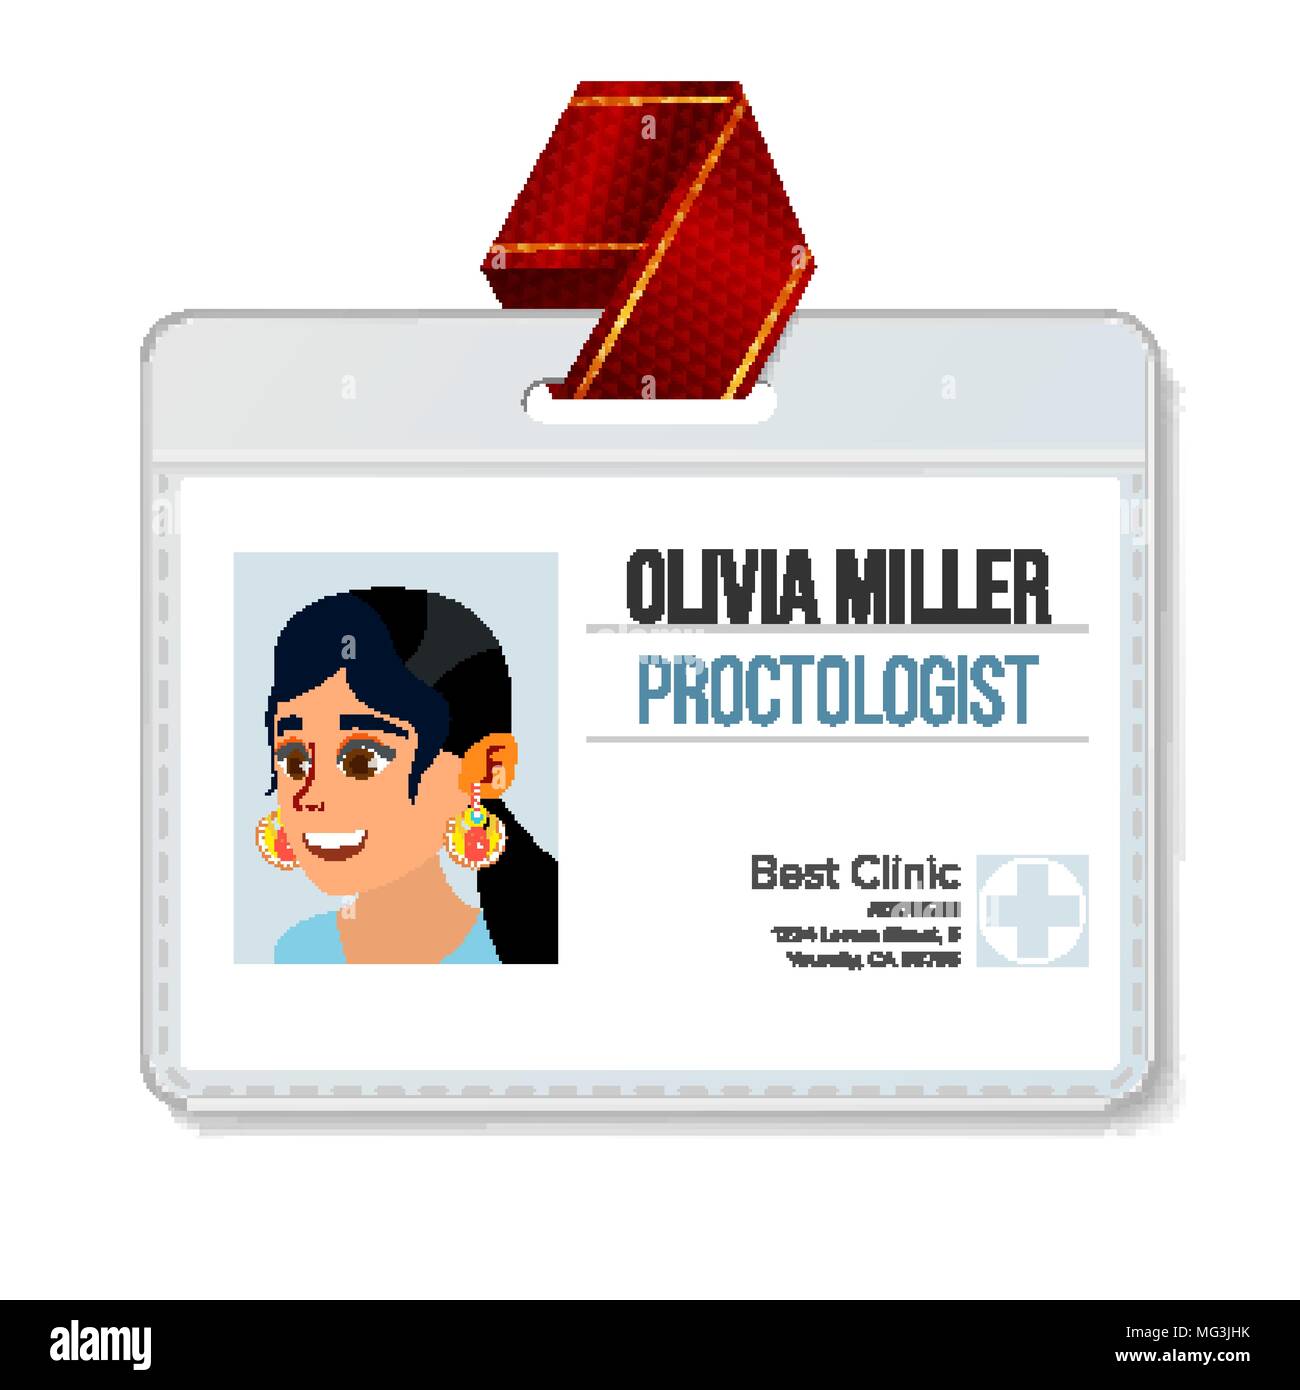 Proctologist Identification Badge Vector. Woman. Id Card Template Regarding Hospital Id Card Template